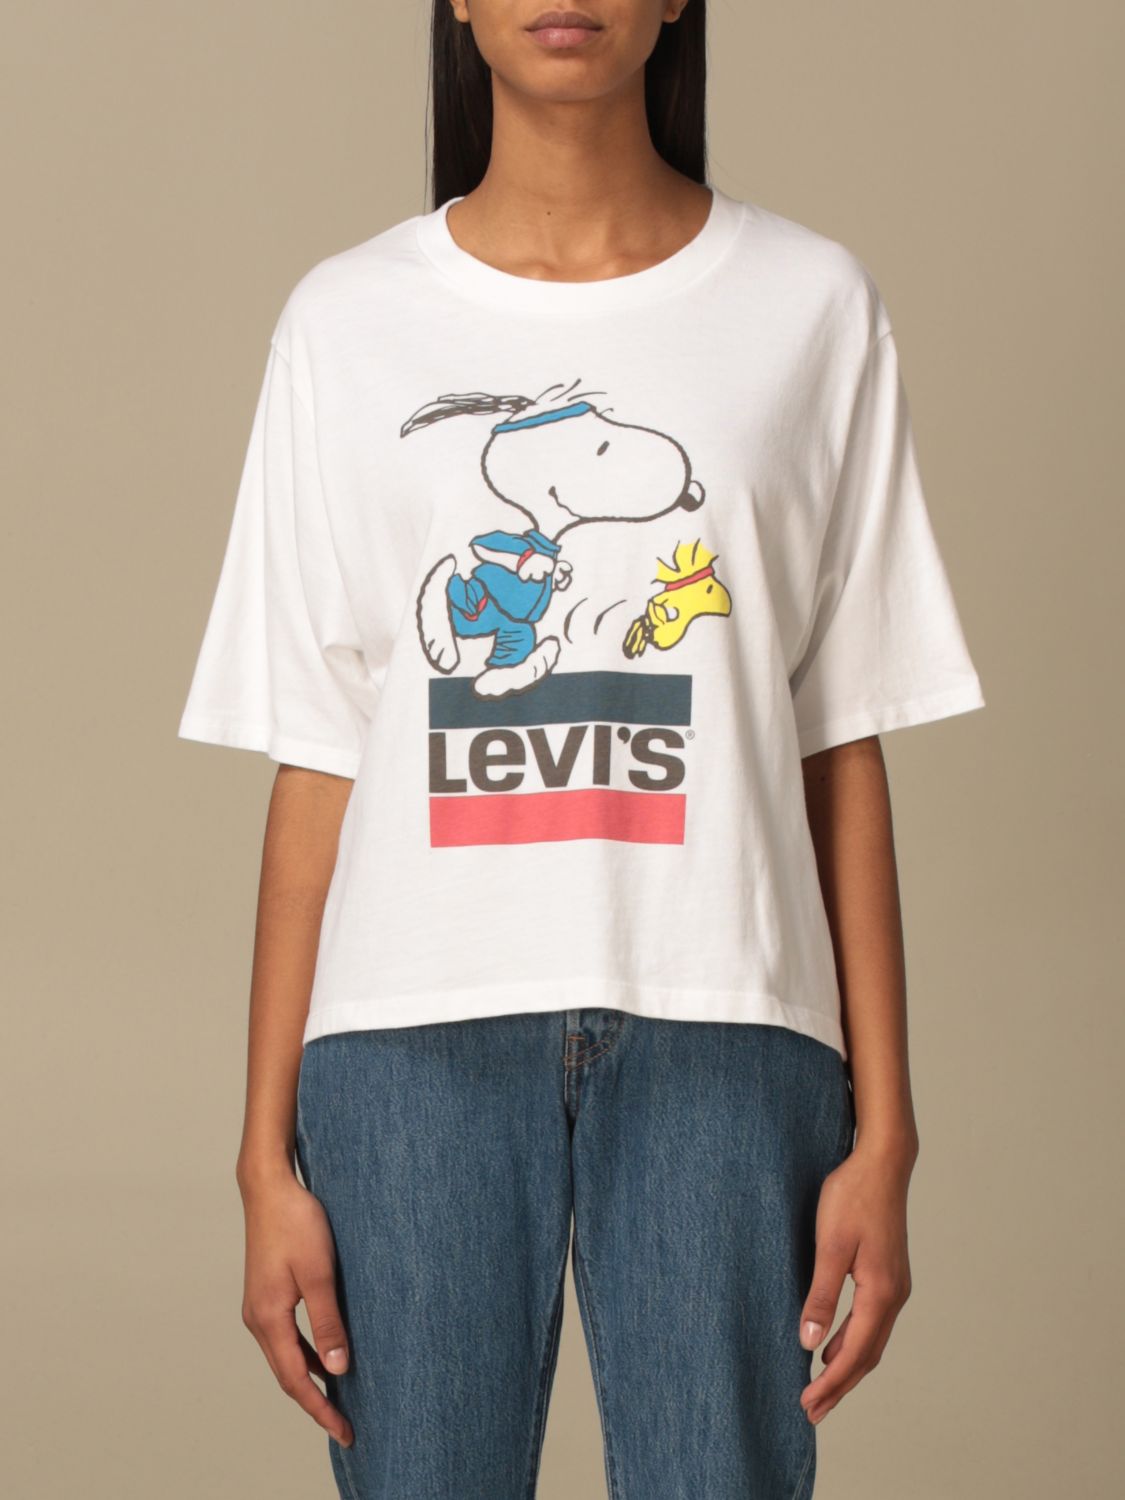 levi's snoopy t shirt womens